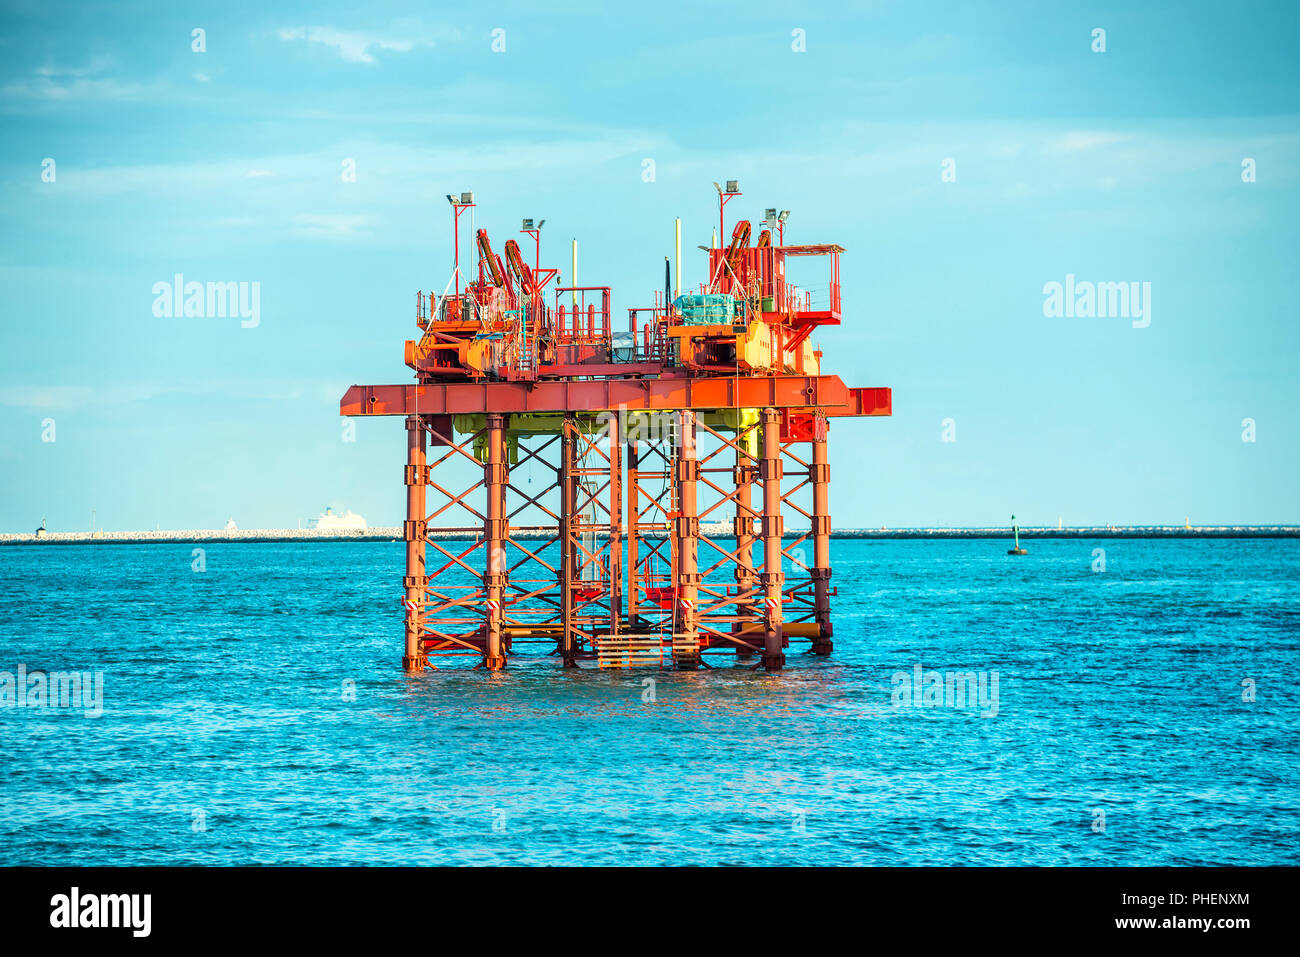 Oil drilling platform offshore Stock Photo